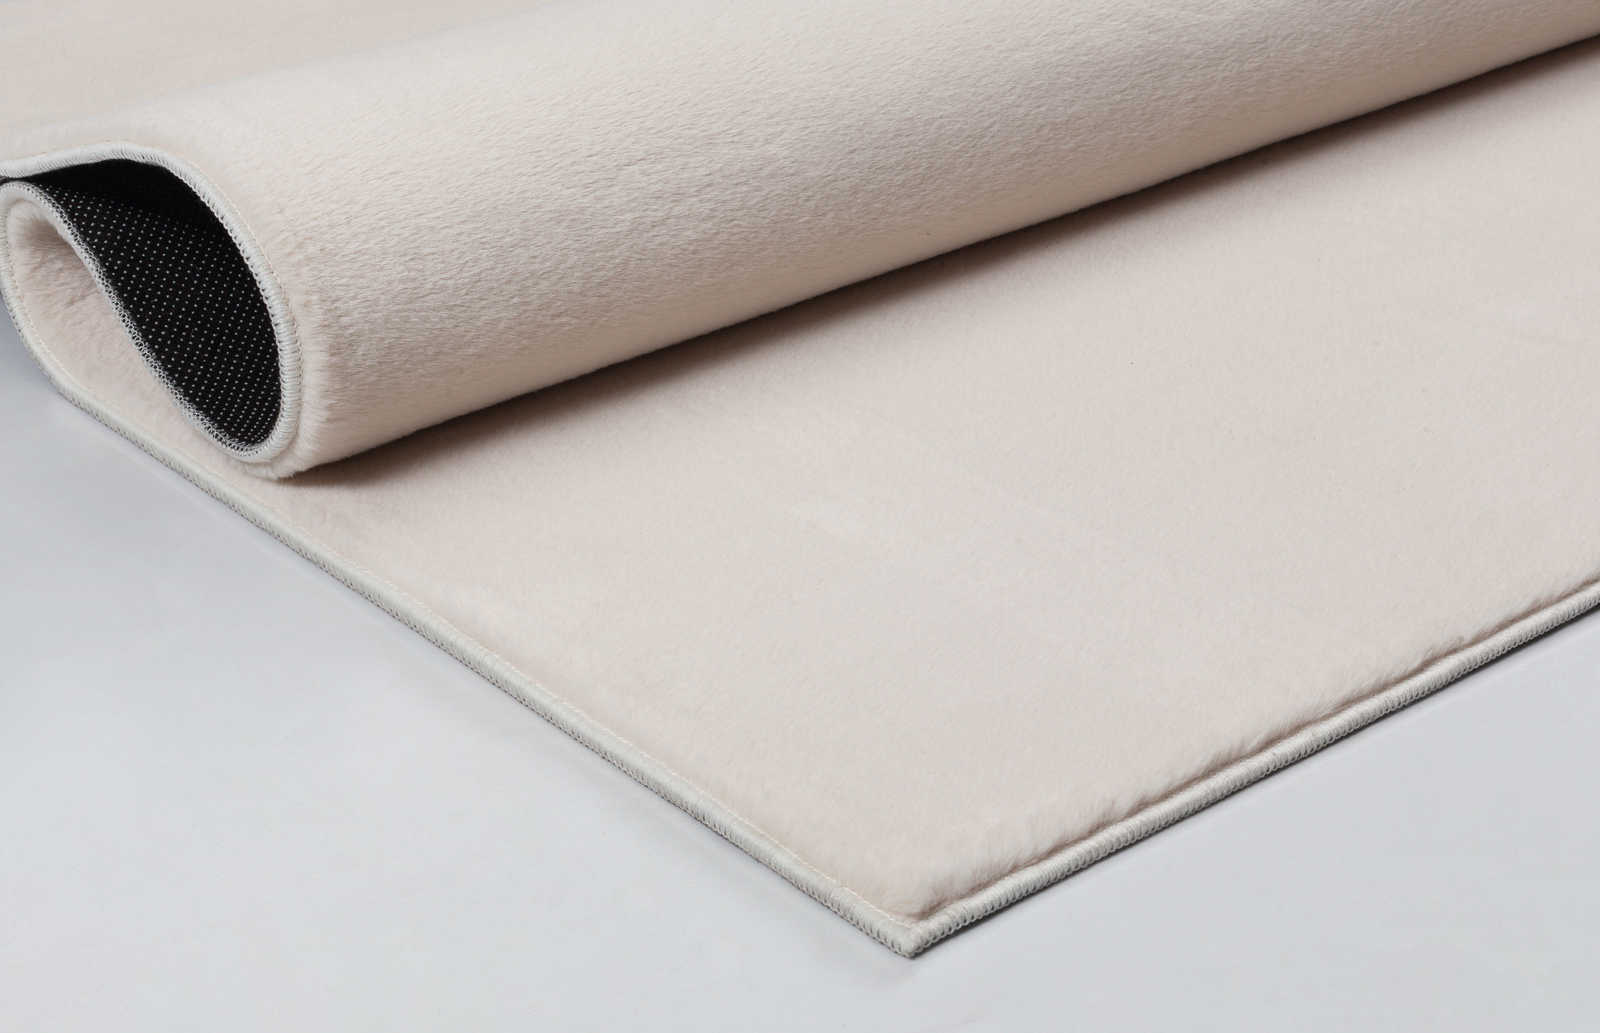             Plain high pile carpet in soft beige - 100 x 50 cm
        